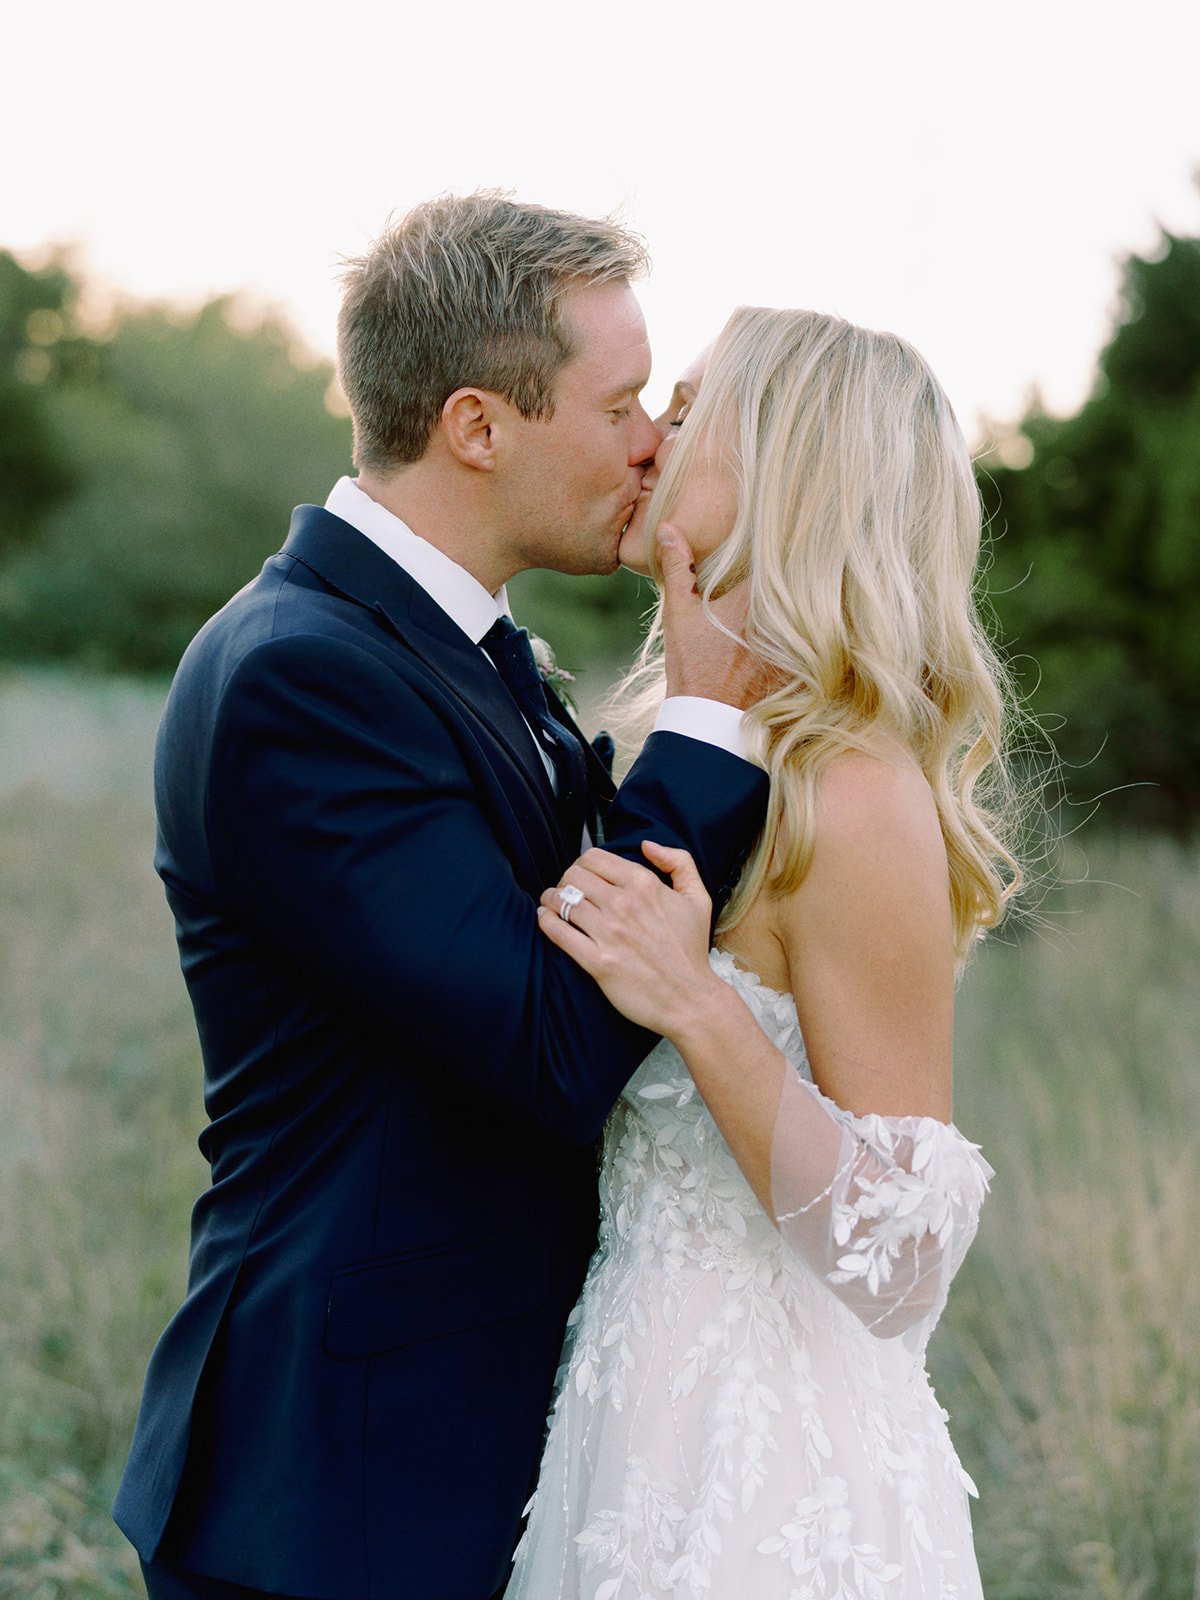 Best-Austin-Wedding-Photographers-Elopement-Film-35mm-Asheville-Santa-Barbara-Backyard-126.jpg